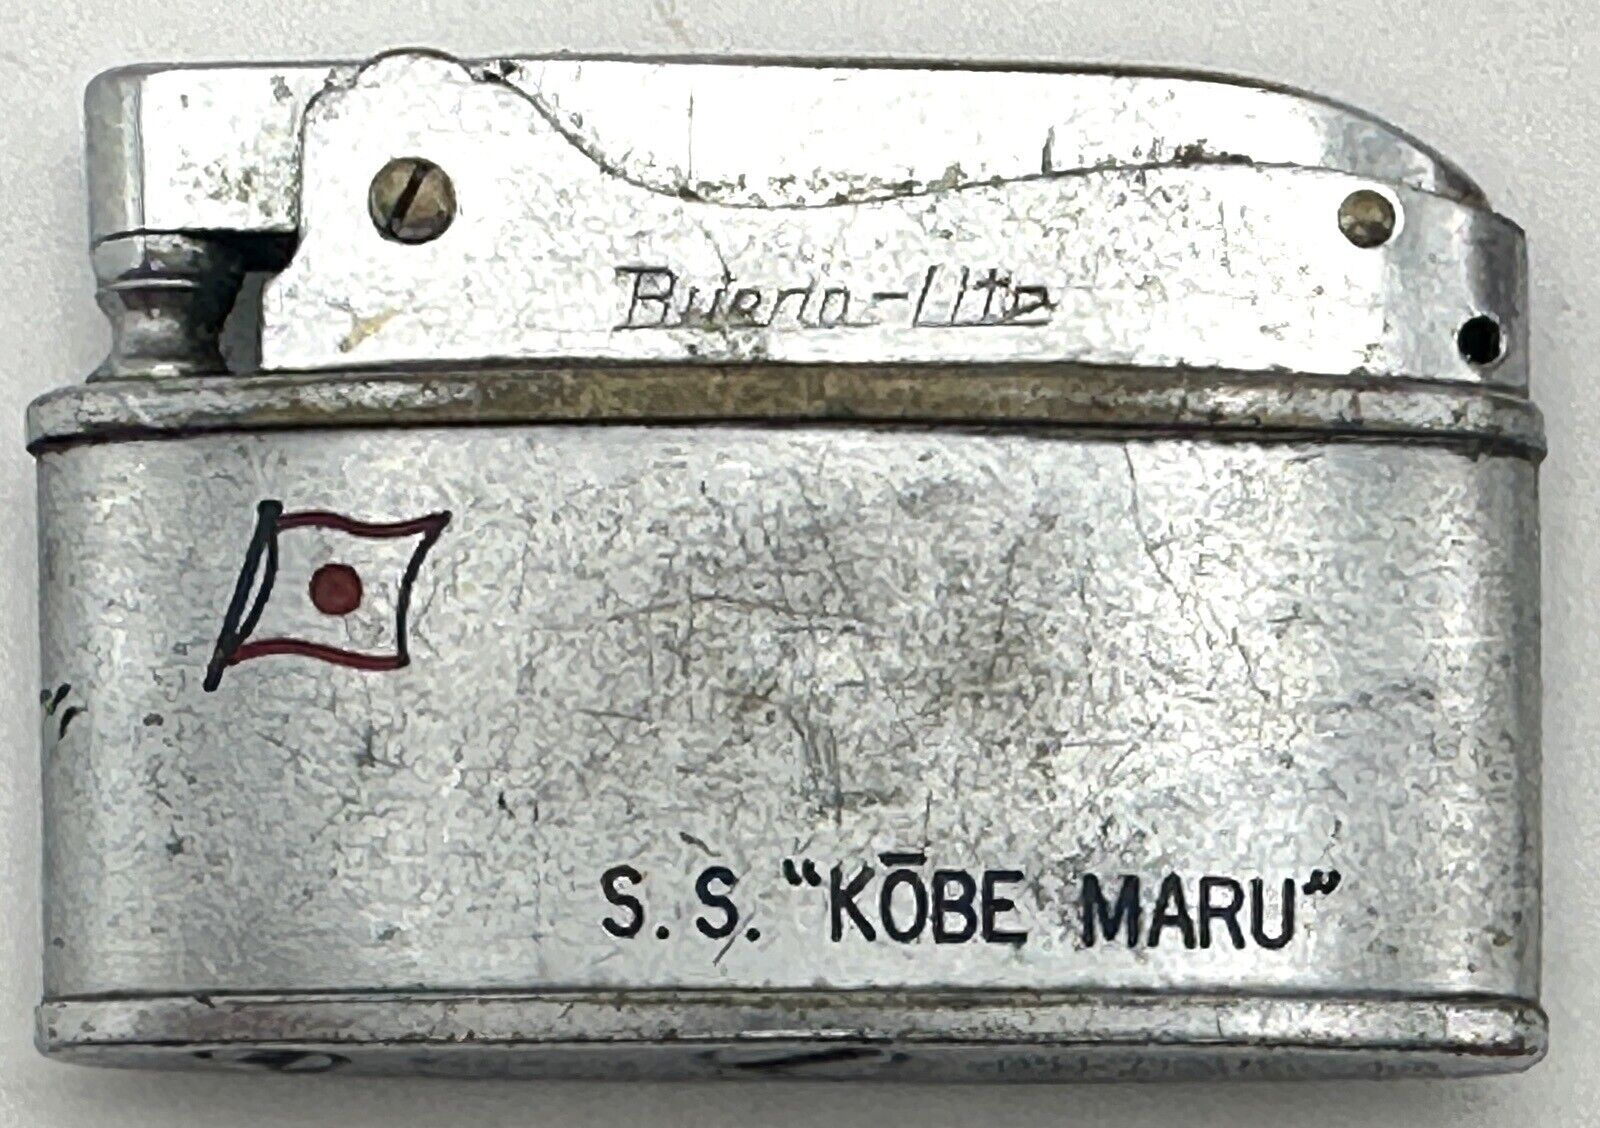 Vintage SS Kobe Maru Buena Lite Cigarette Lighter Kokai Maru Japanese Cargo Ship